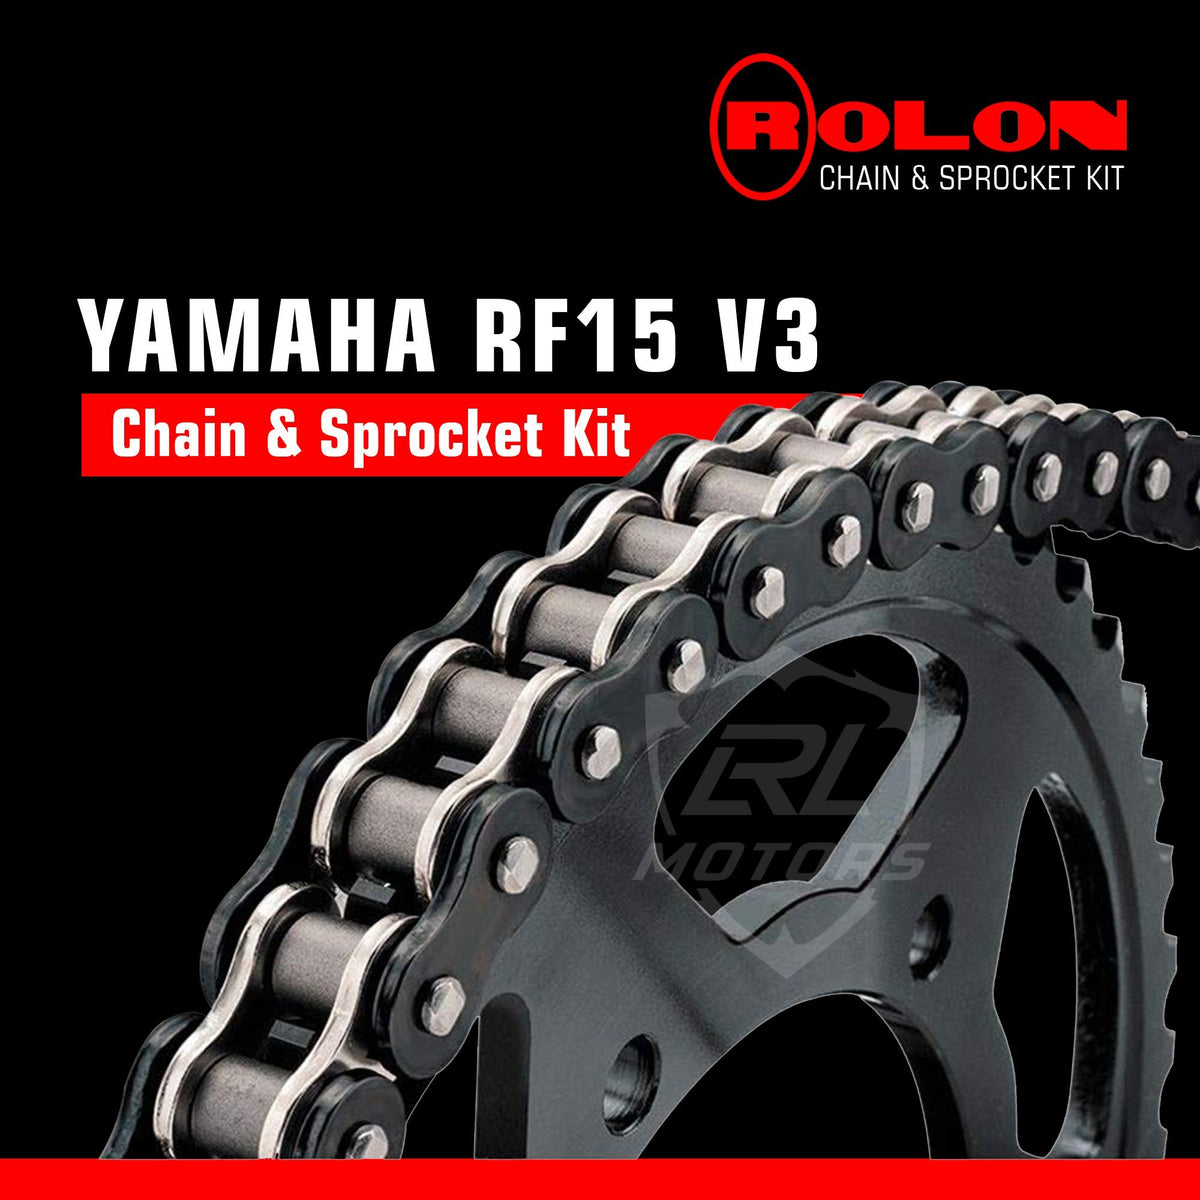 Yamaha R15 v3 Rolon Chain & Sprocket - LRL Motors